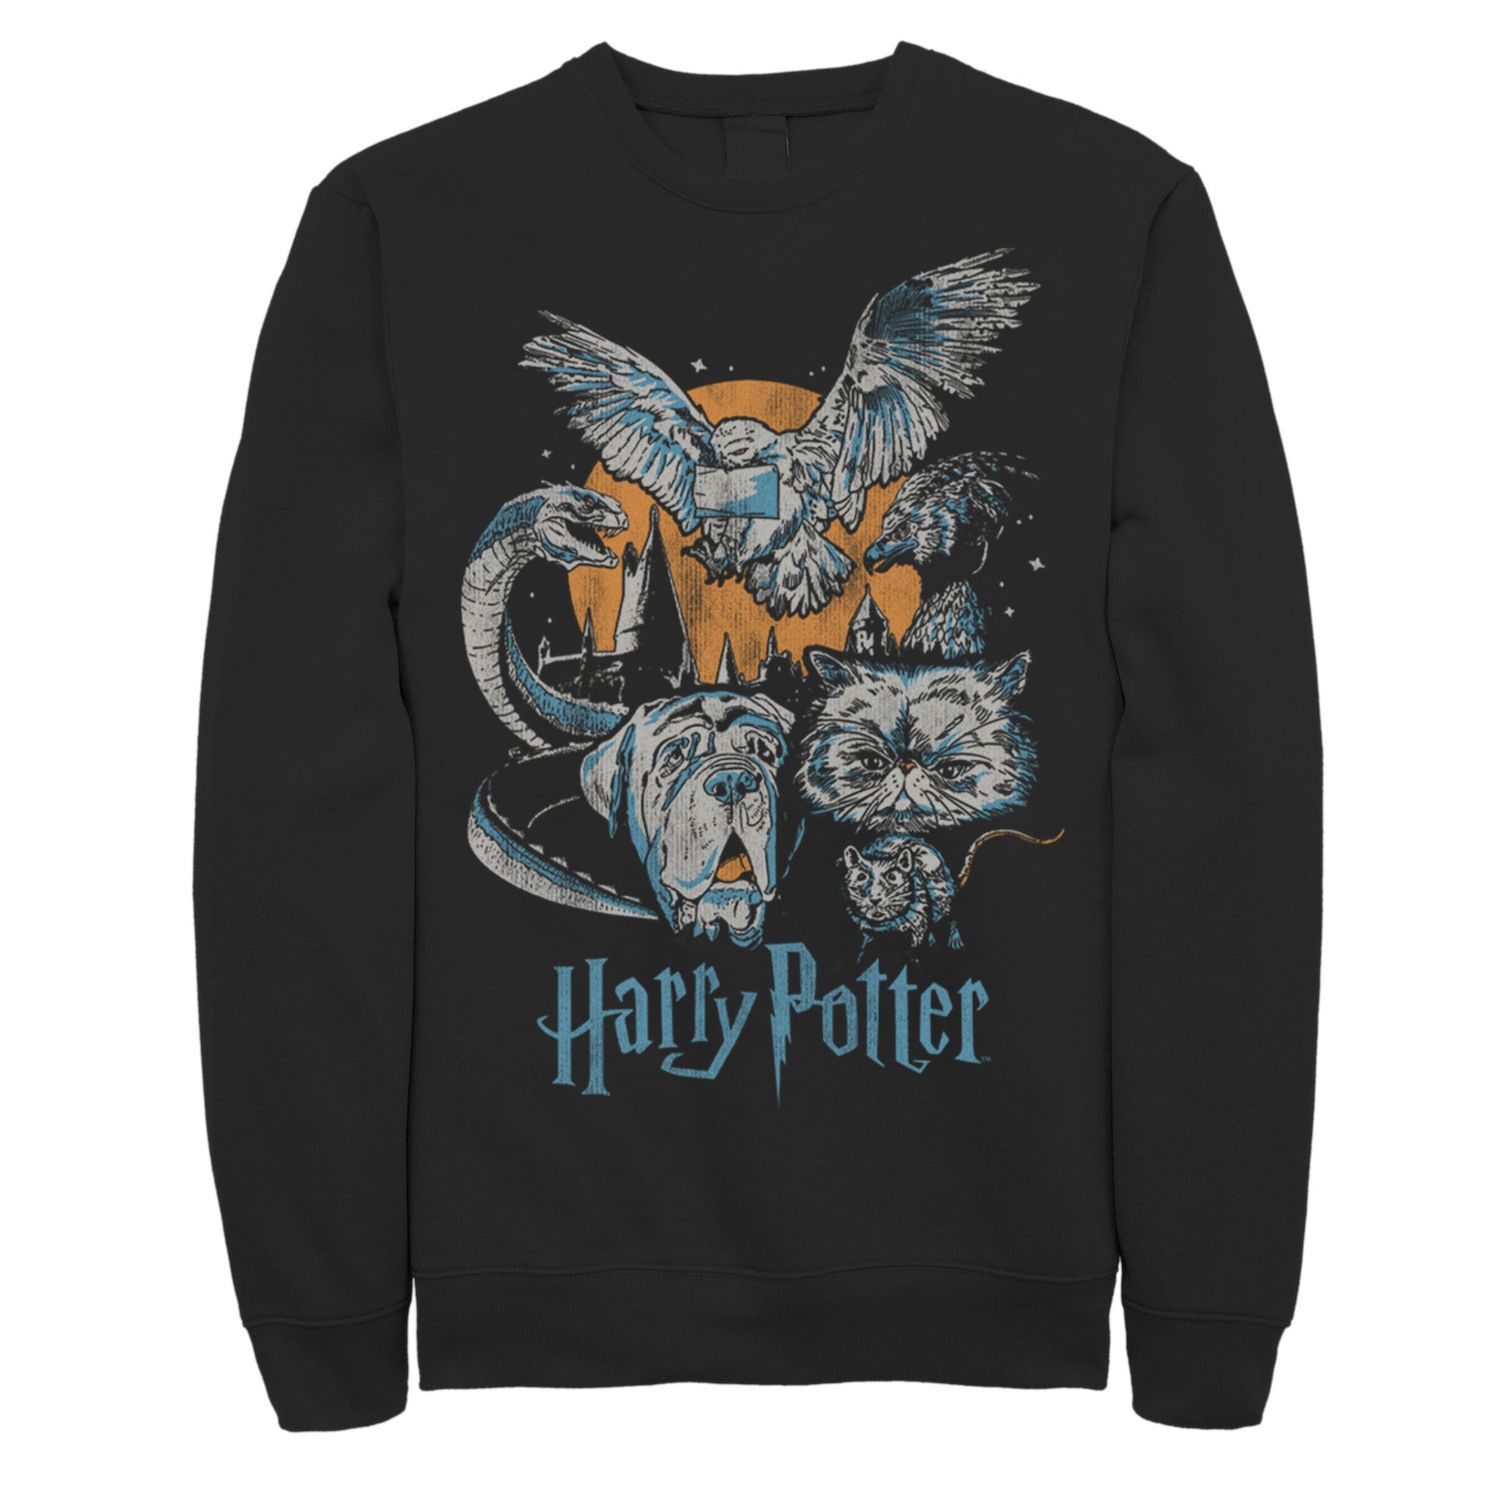 Image for Harry Potter Men's Night Animal Poster Sweatshirt at Kohl's.